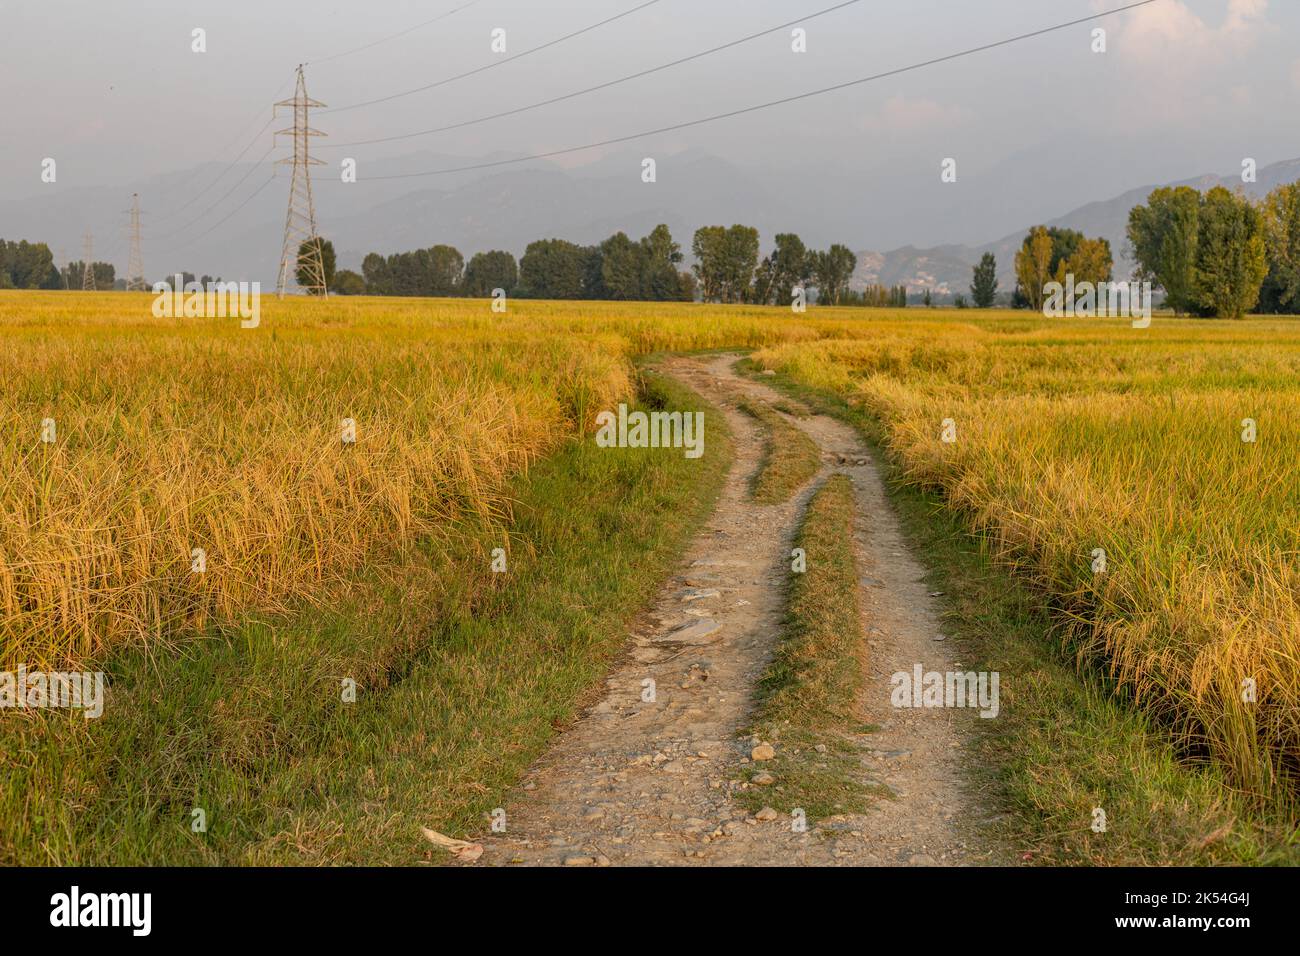 Dirt road passing through the yellow ripe rice fields Stock Photo